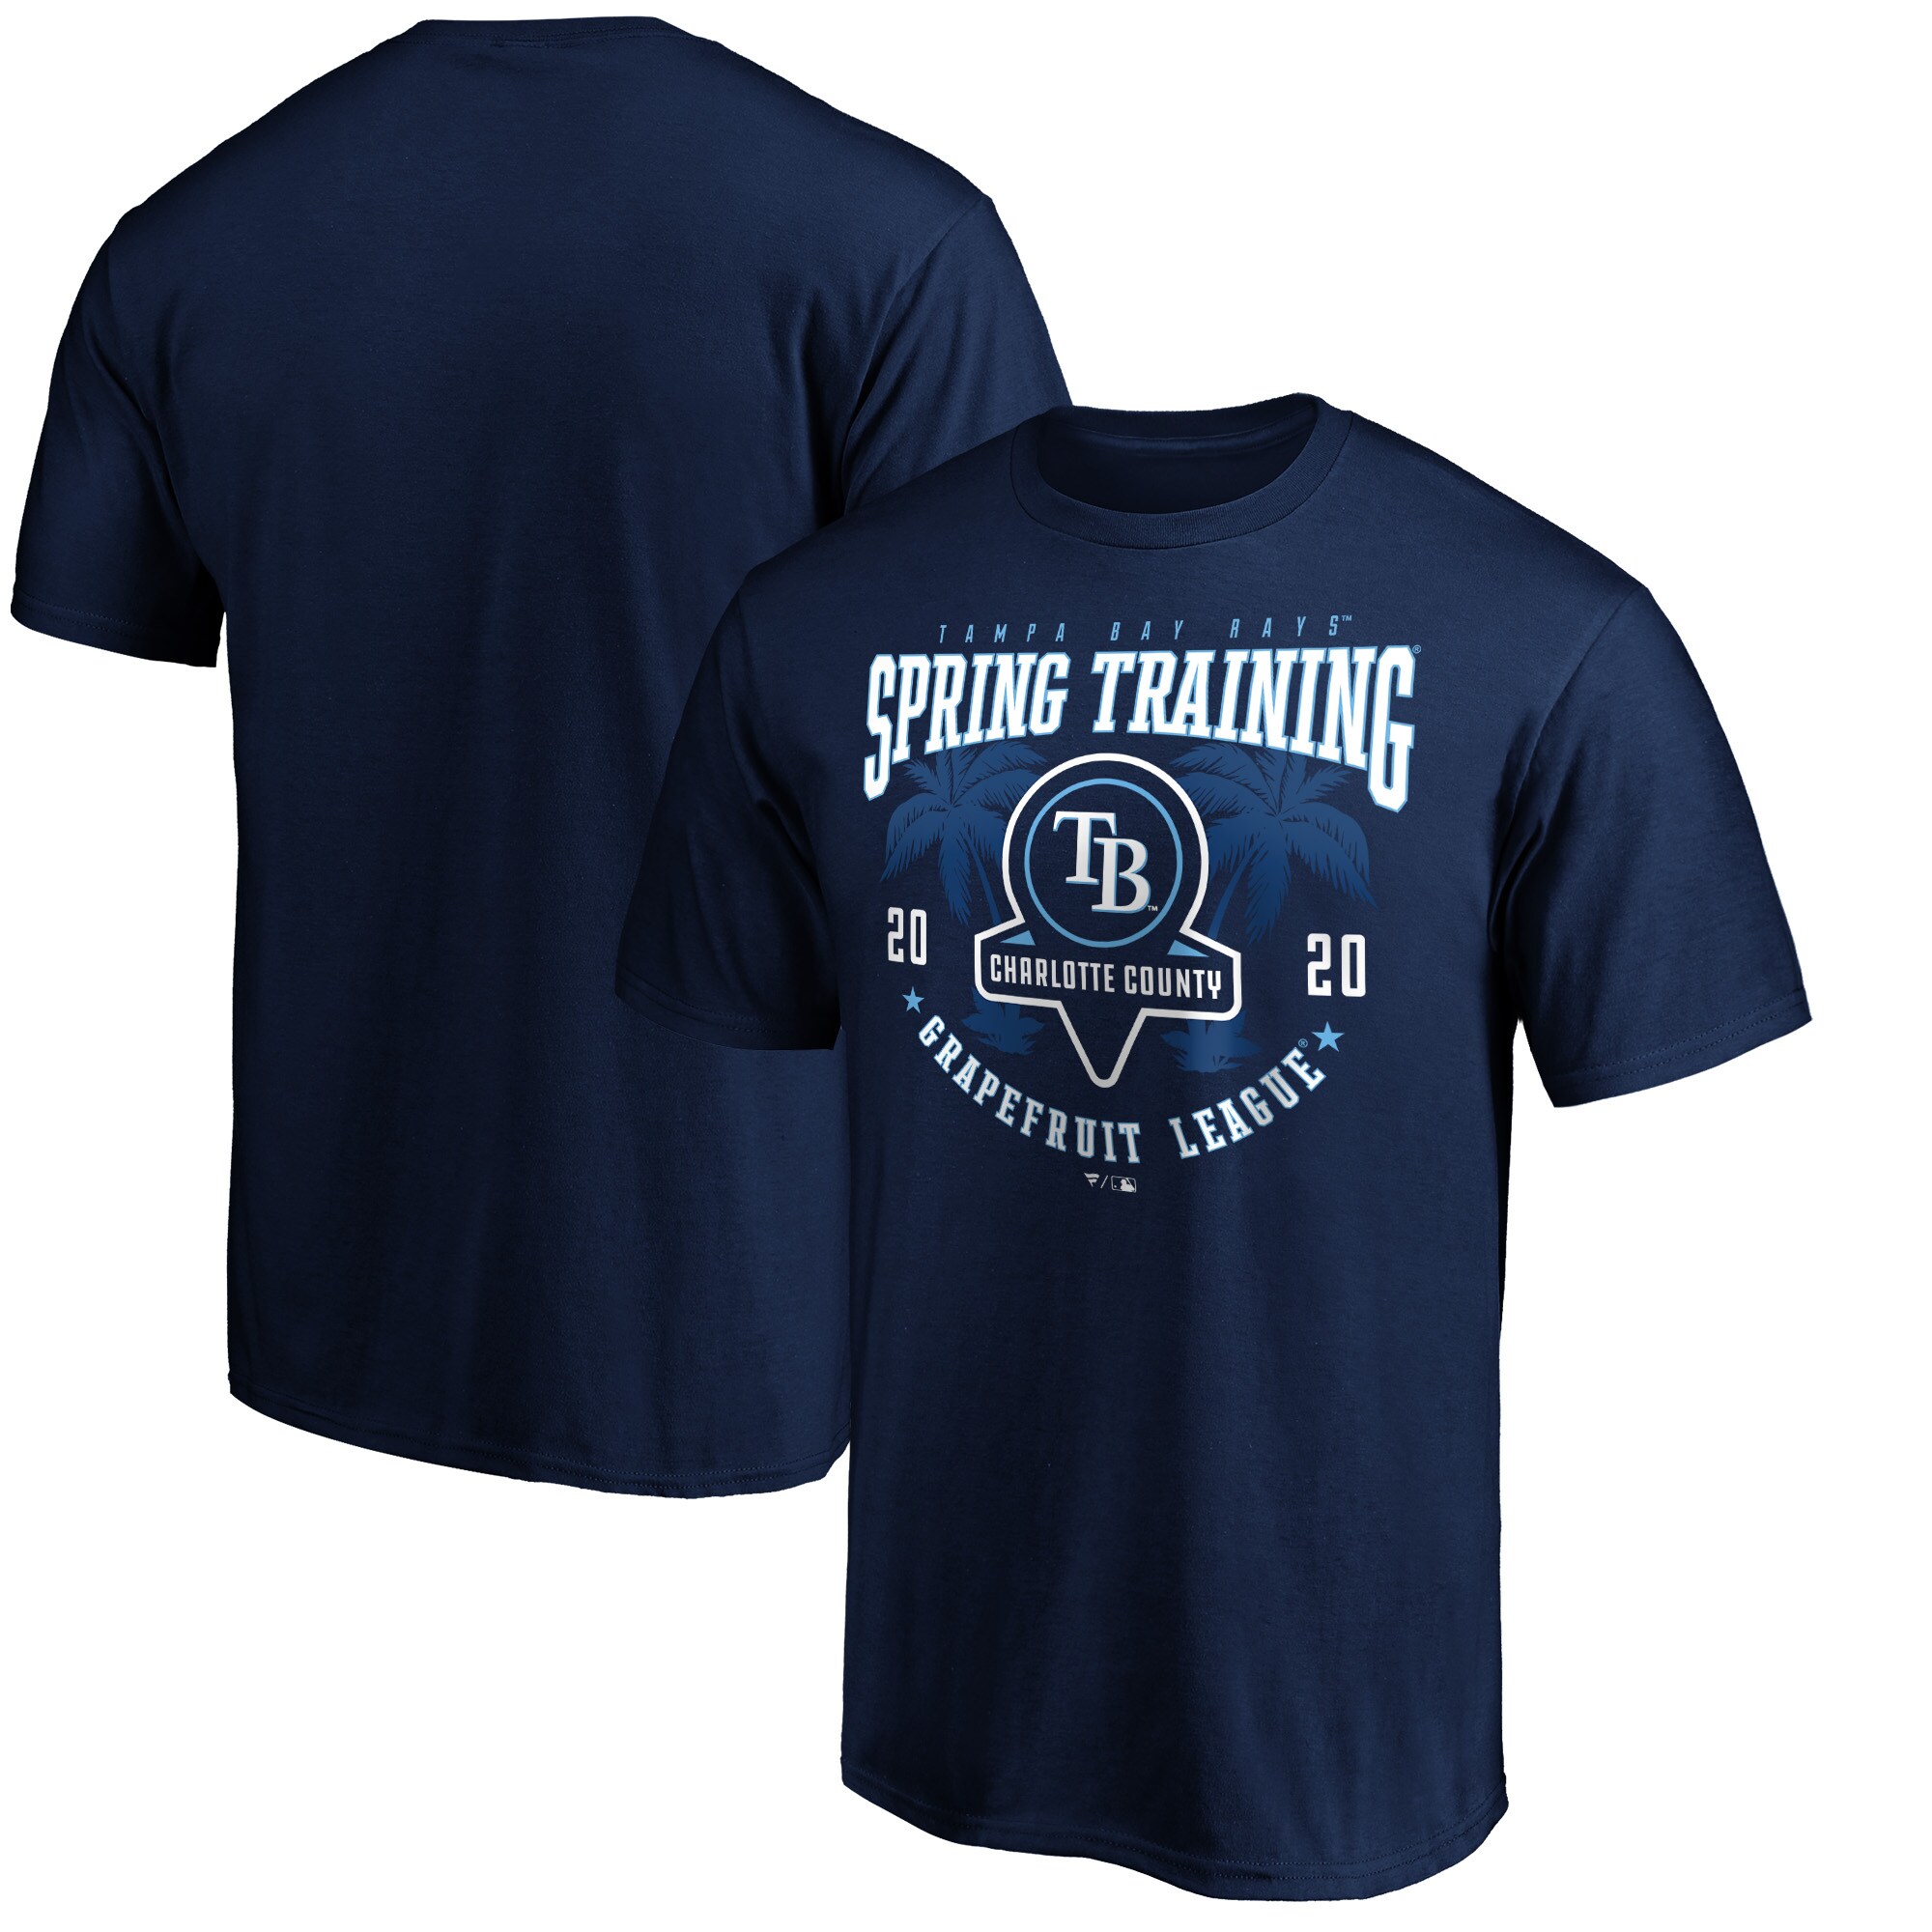 spring training shirts 2020